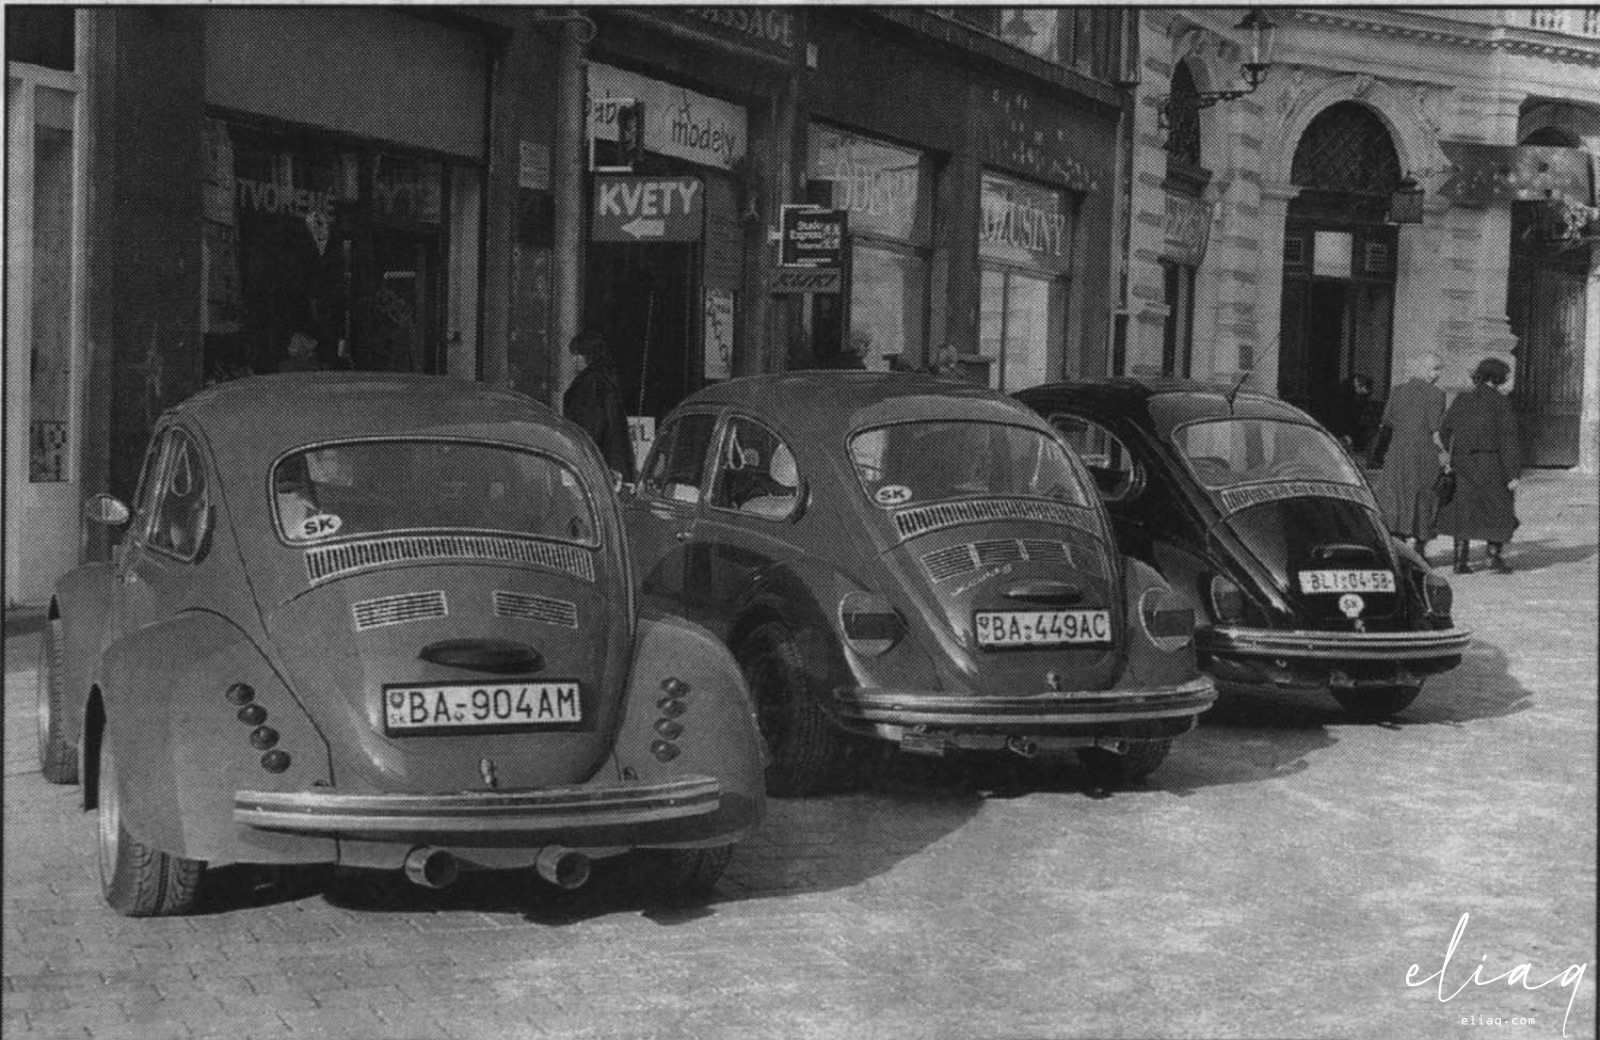 stará fotka áut z bratislavy, vrátane klenotov z volkswagen klubu